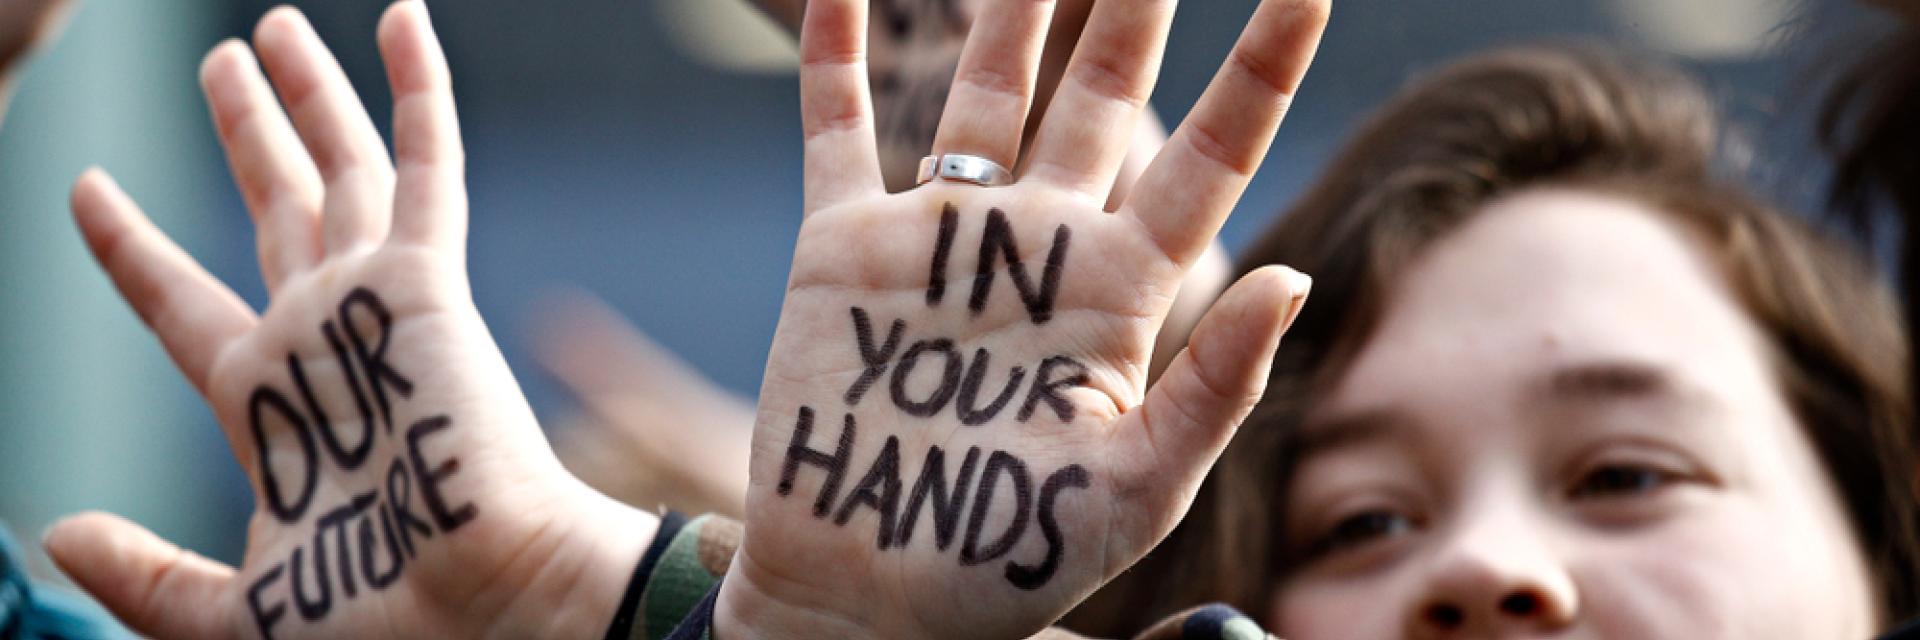 In your hands